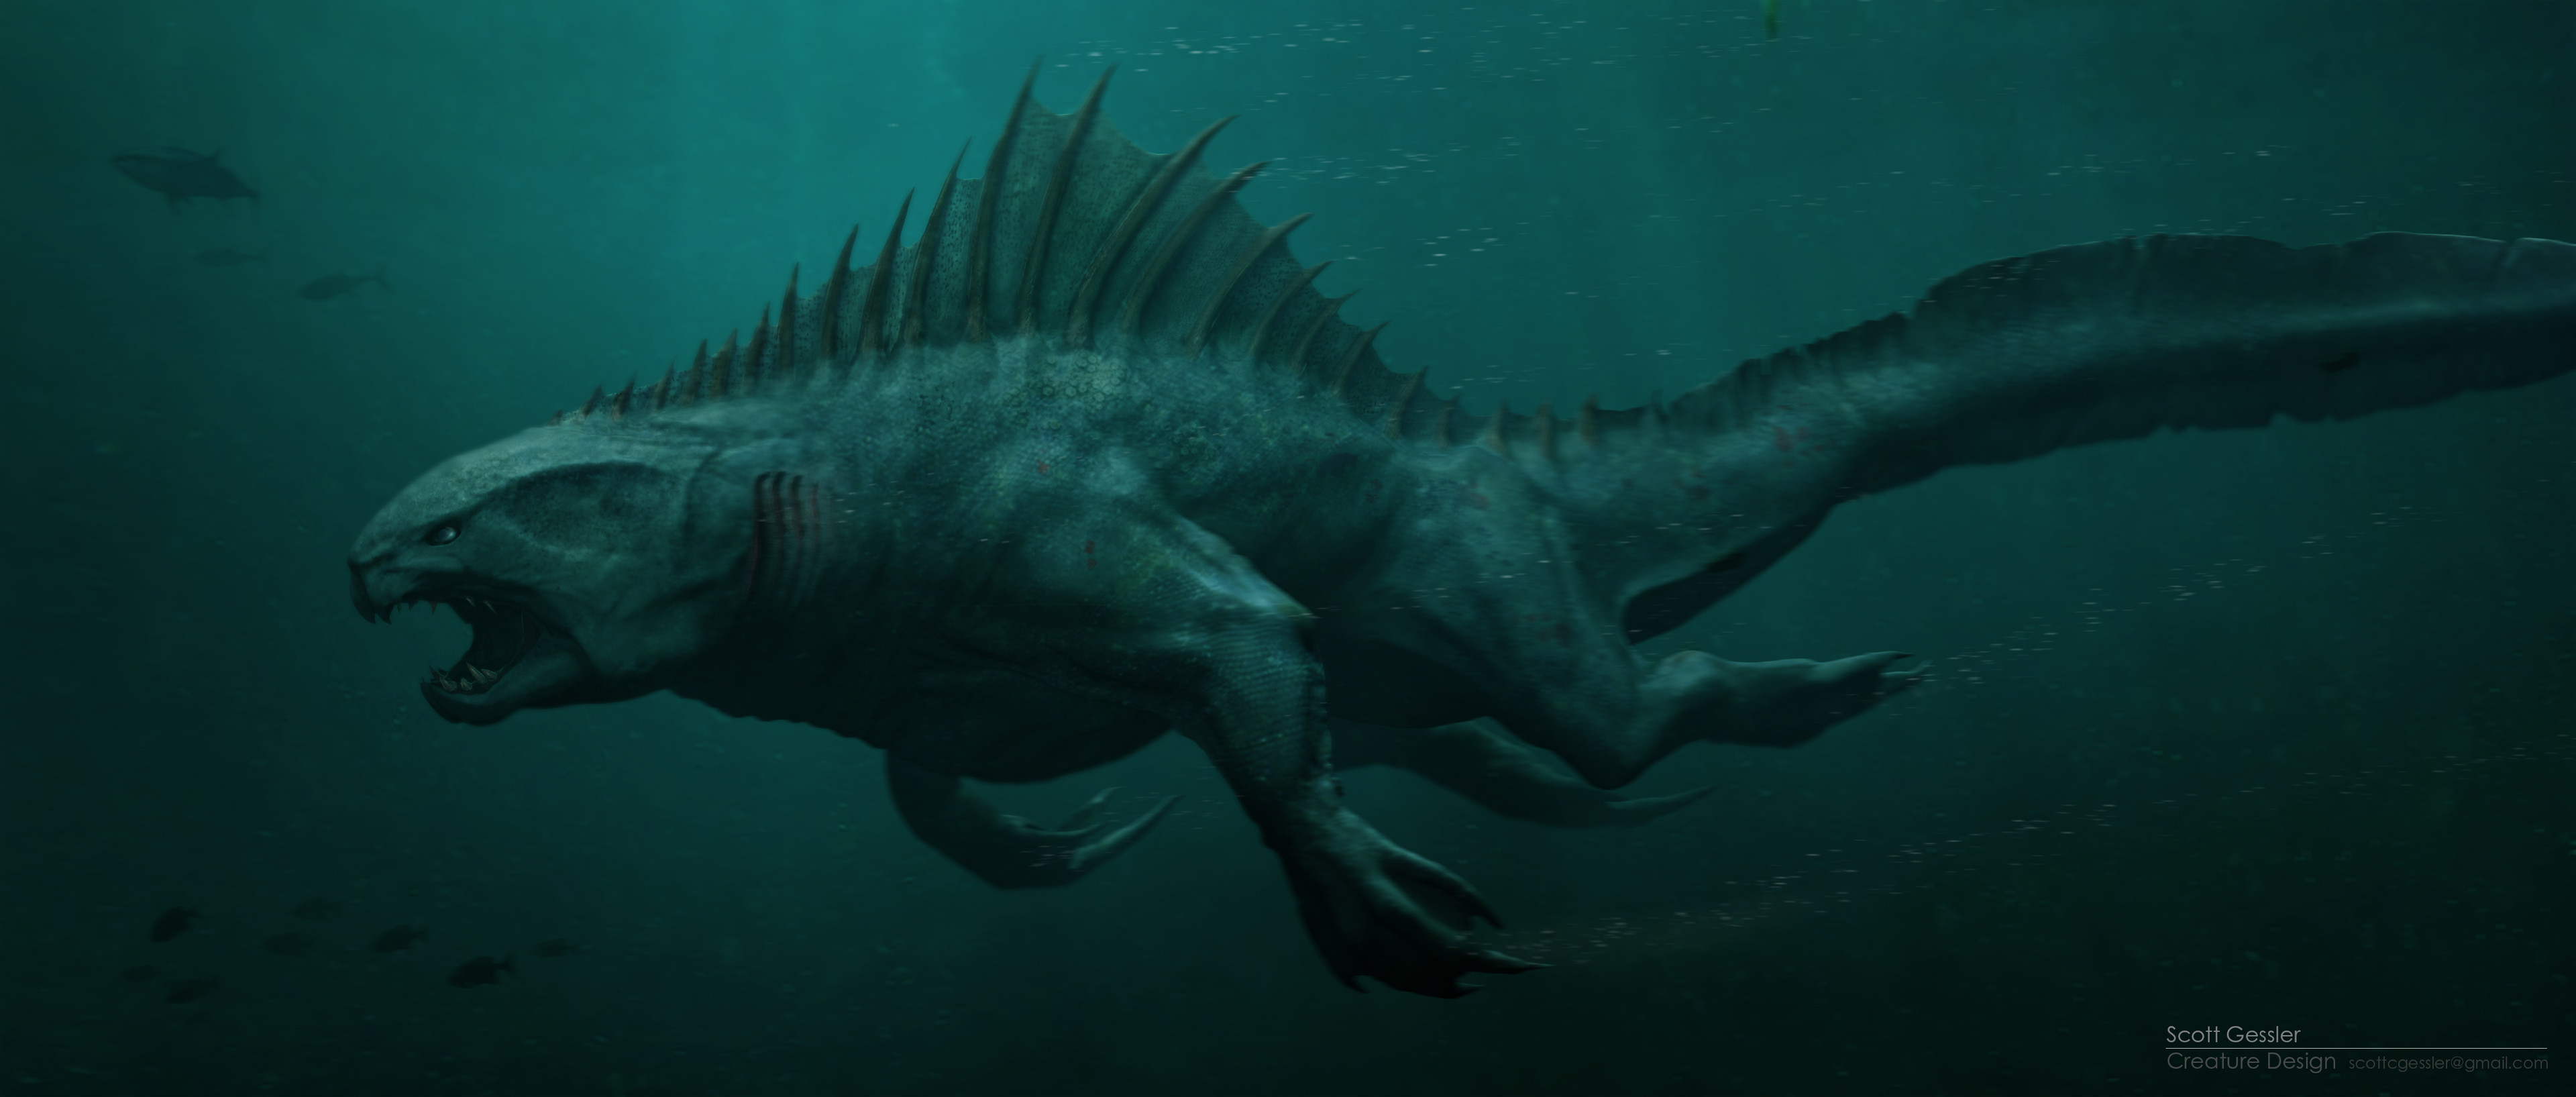 A new species of amphibious dinosaur.